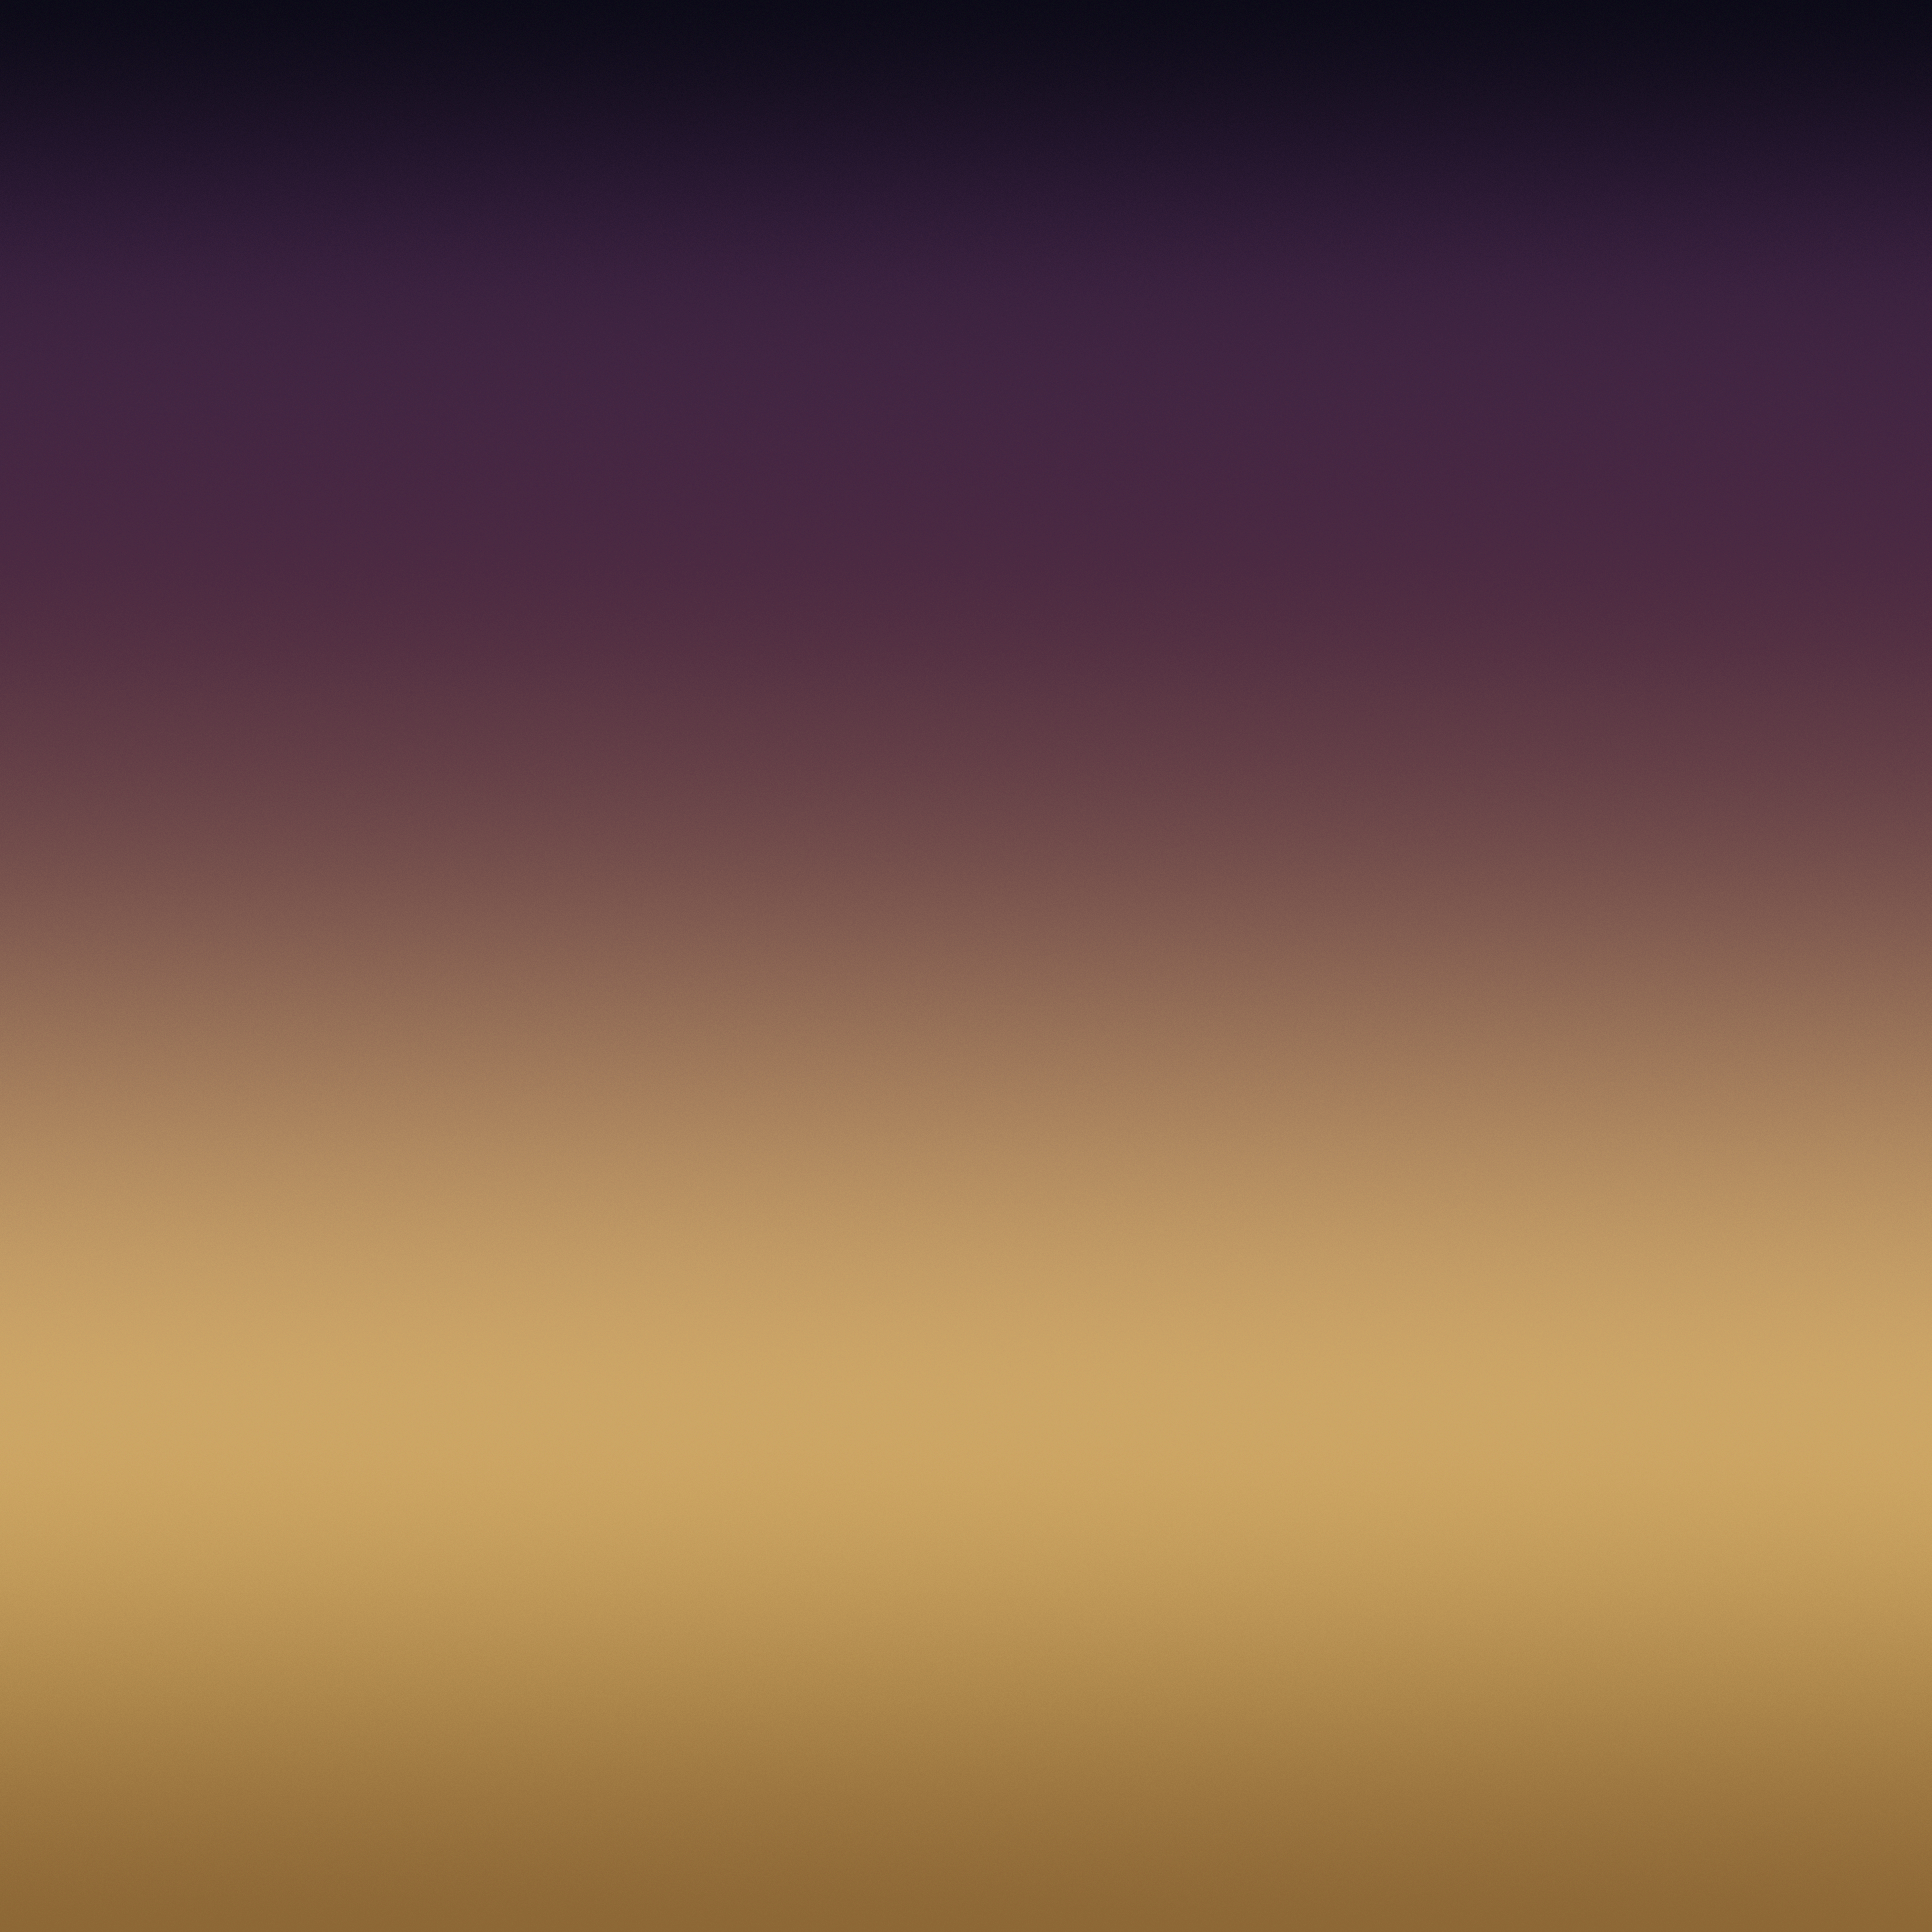 galaxy s8 wallpaper,sky,purple,violet,brown,yellow